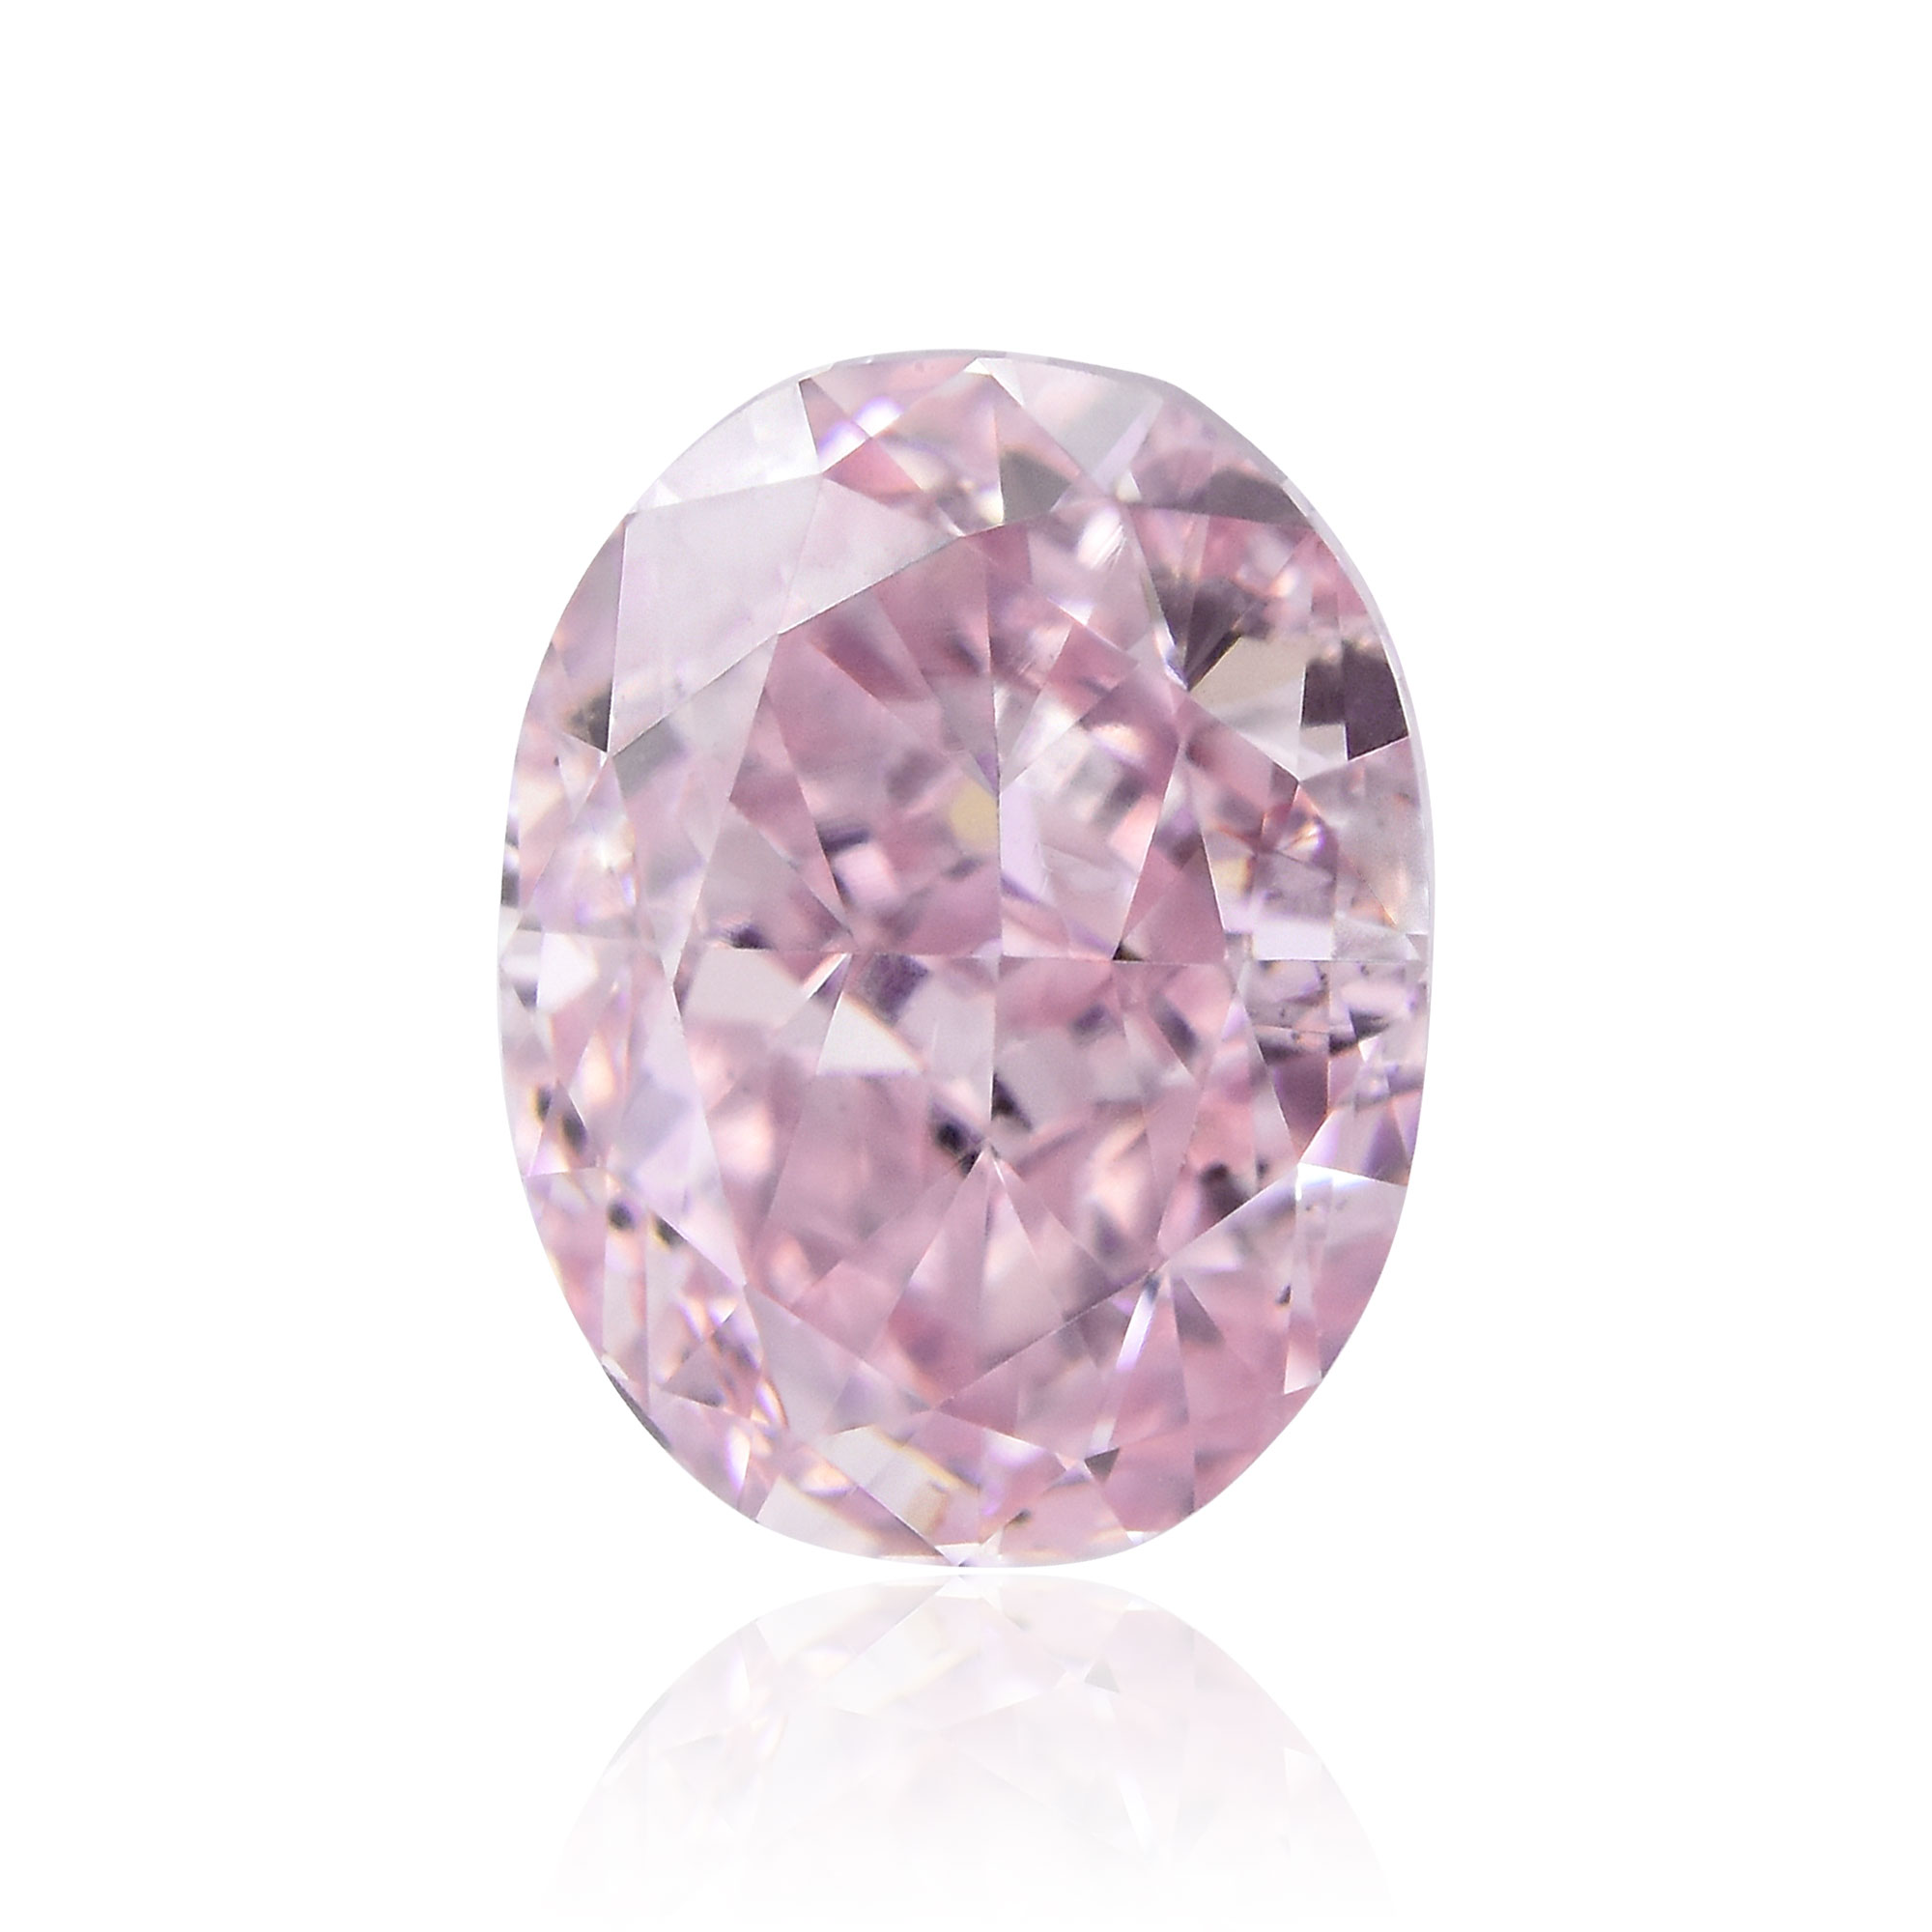 0.31 carat, Fancy Purplish Pink Diamond, Oval Shape, SI2 Clarity